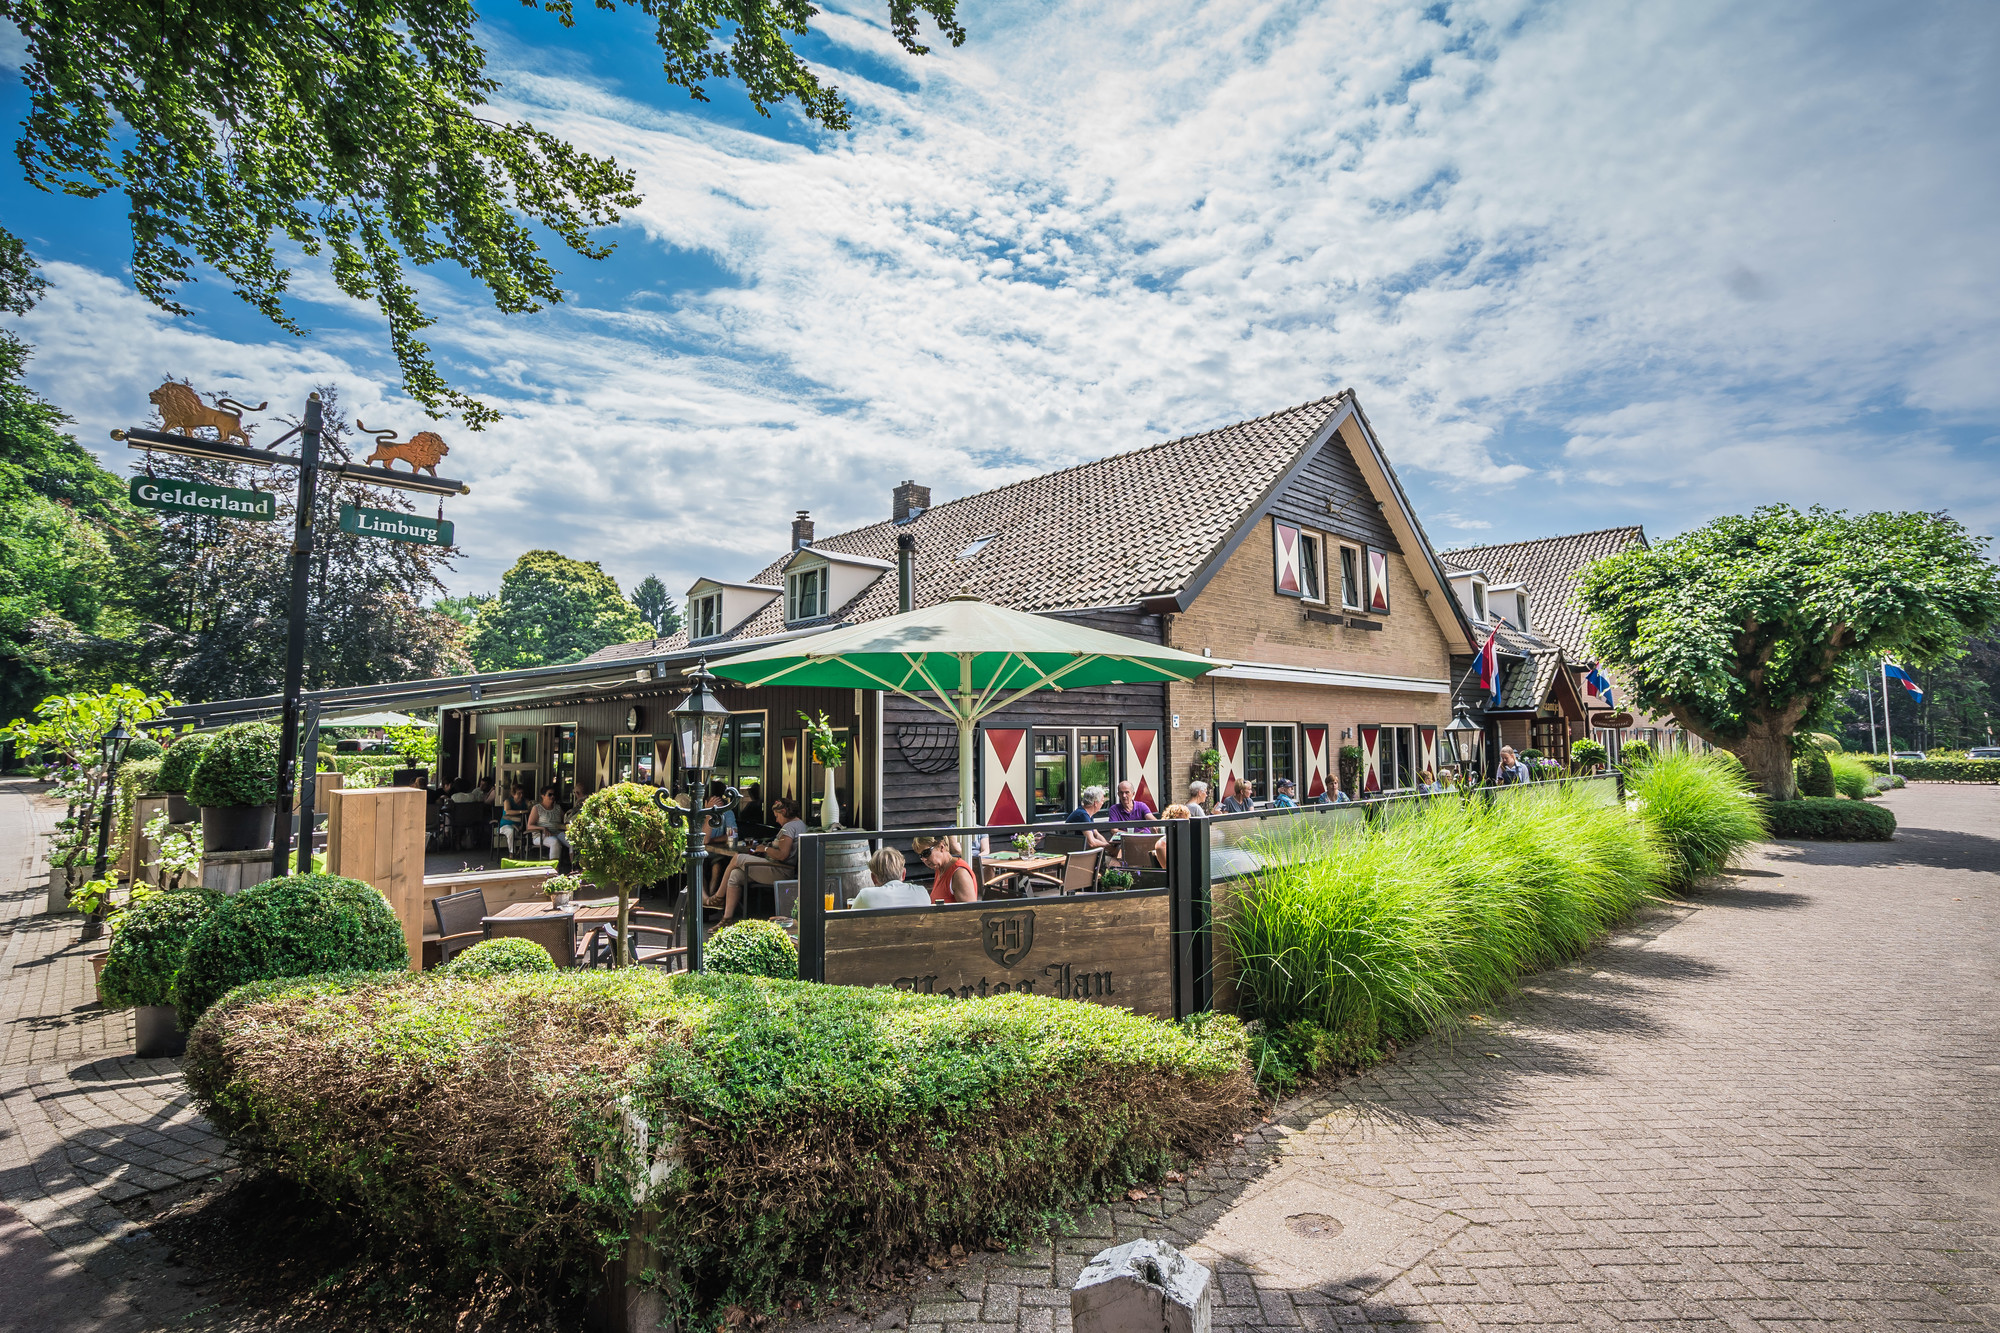 Herberg Restaurant  t Zwaantje - Image1